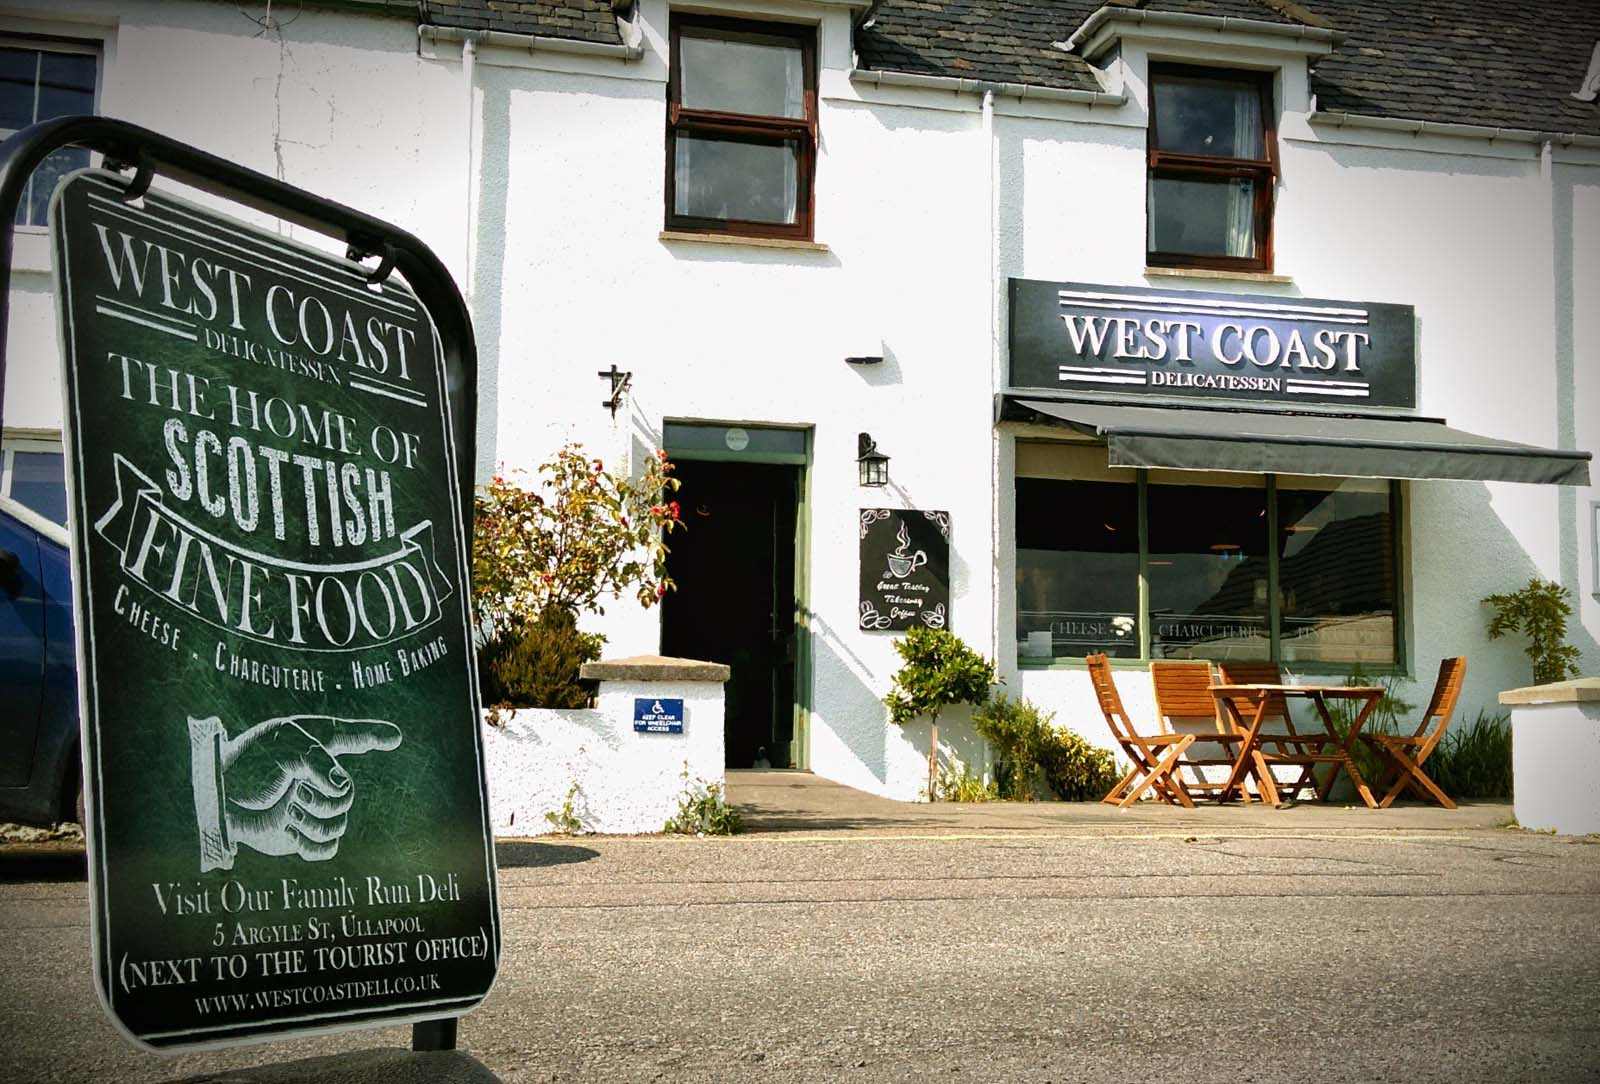 West coast delicatessen, scottish fine food, 5 argyle st ullapool, scotland